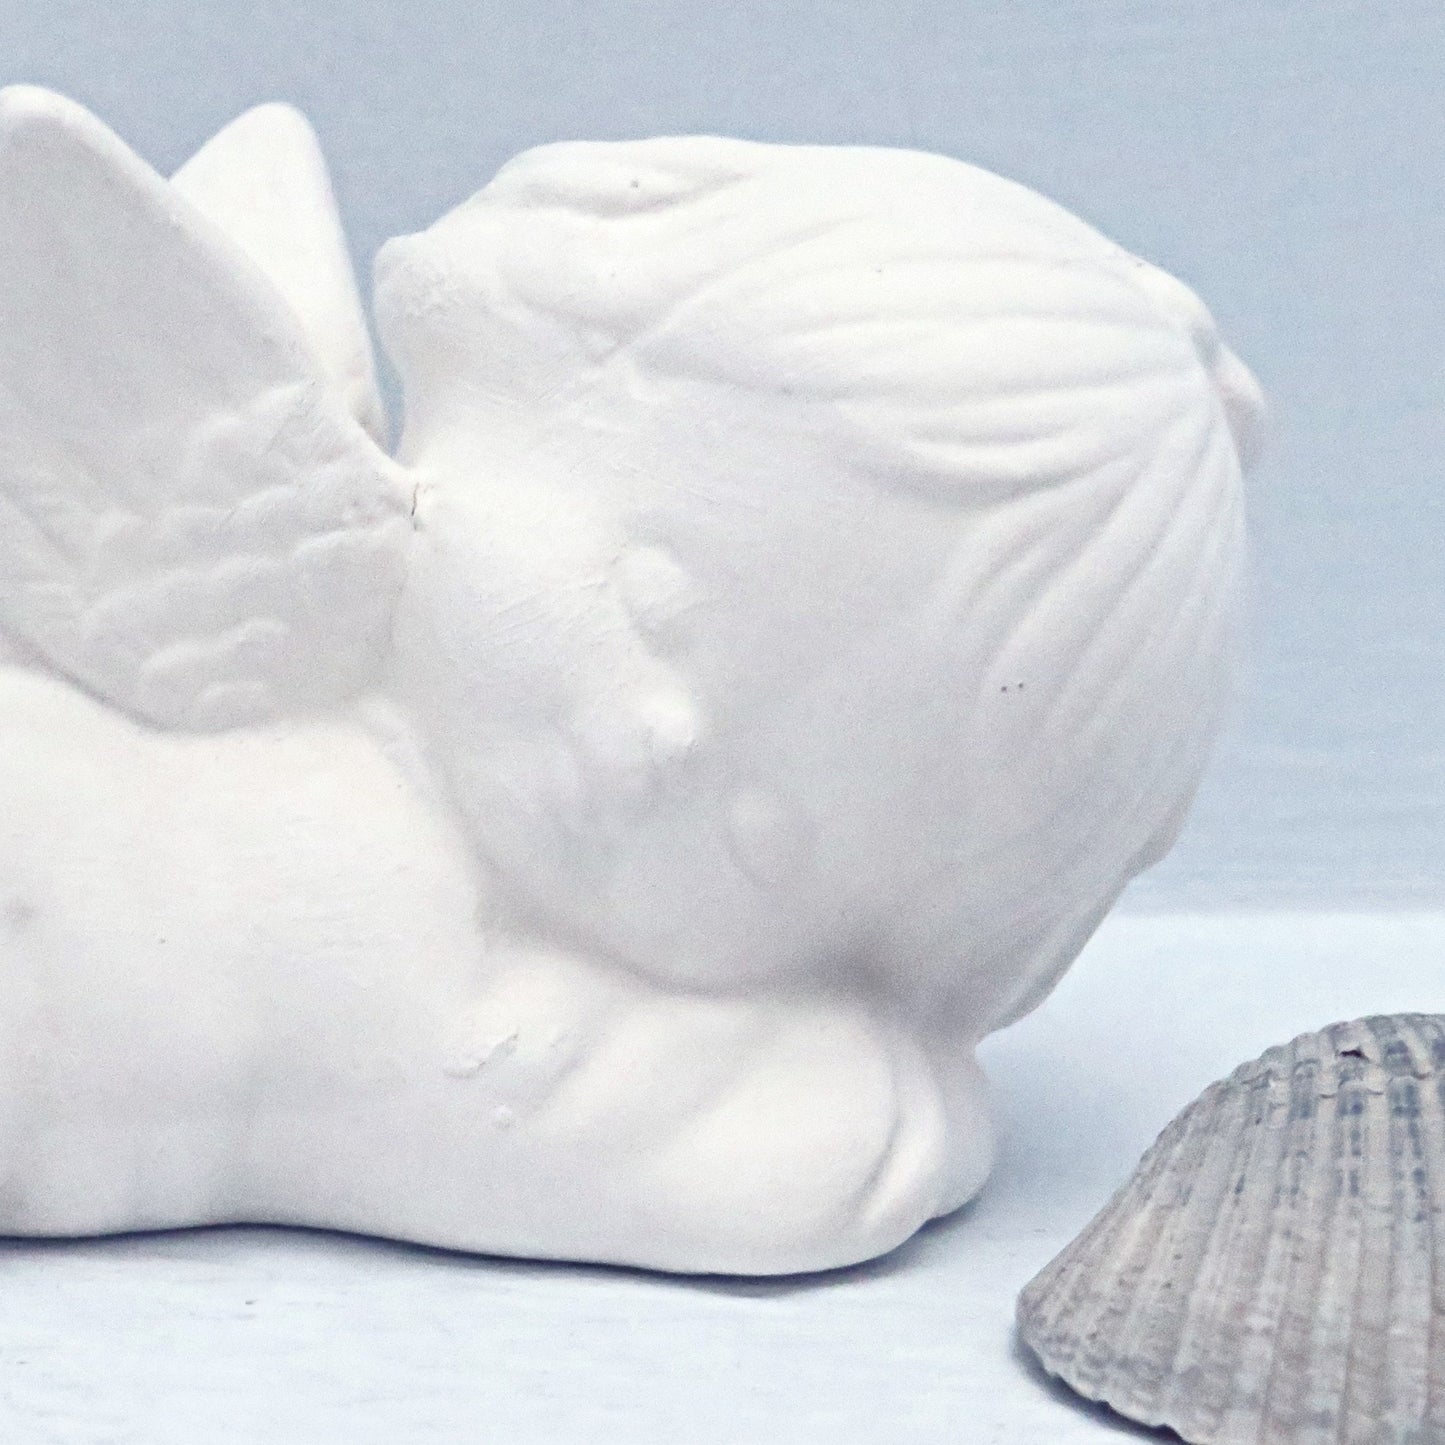 Ready to Paint Handmade Ceramic Angel Figurine / Ceramic Bisque / Ceramics to Paint / Unpainted Ceramic Angel Statue / Angel Decor / Gift